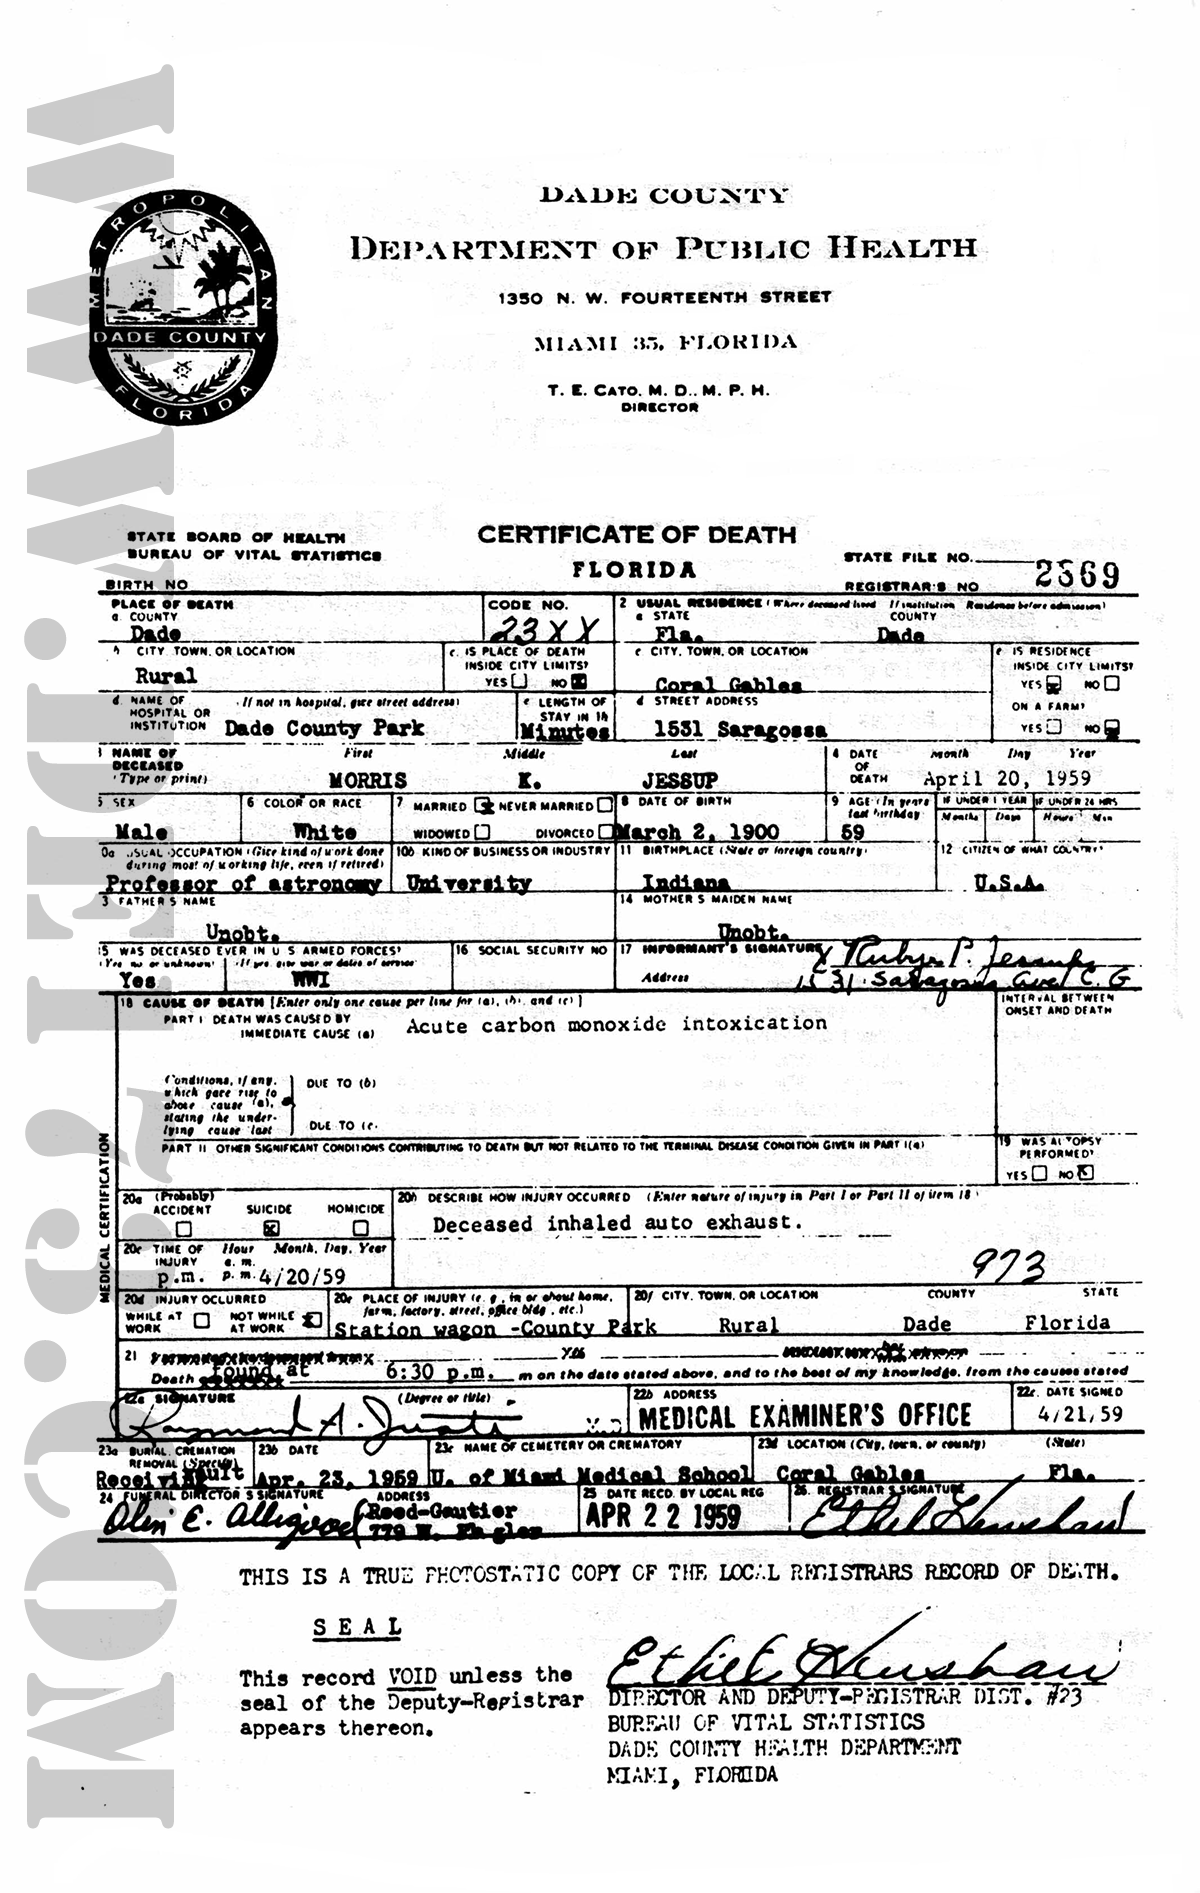 Morris K. Jessup’s Death Certificate